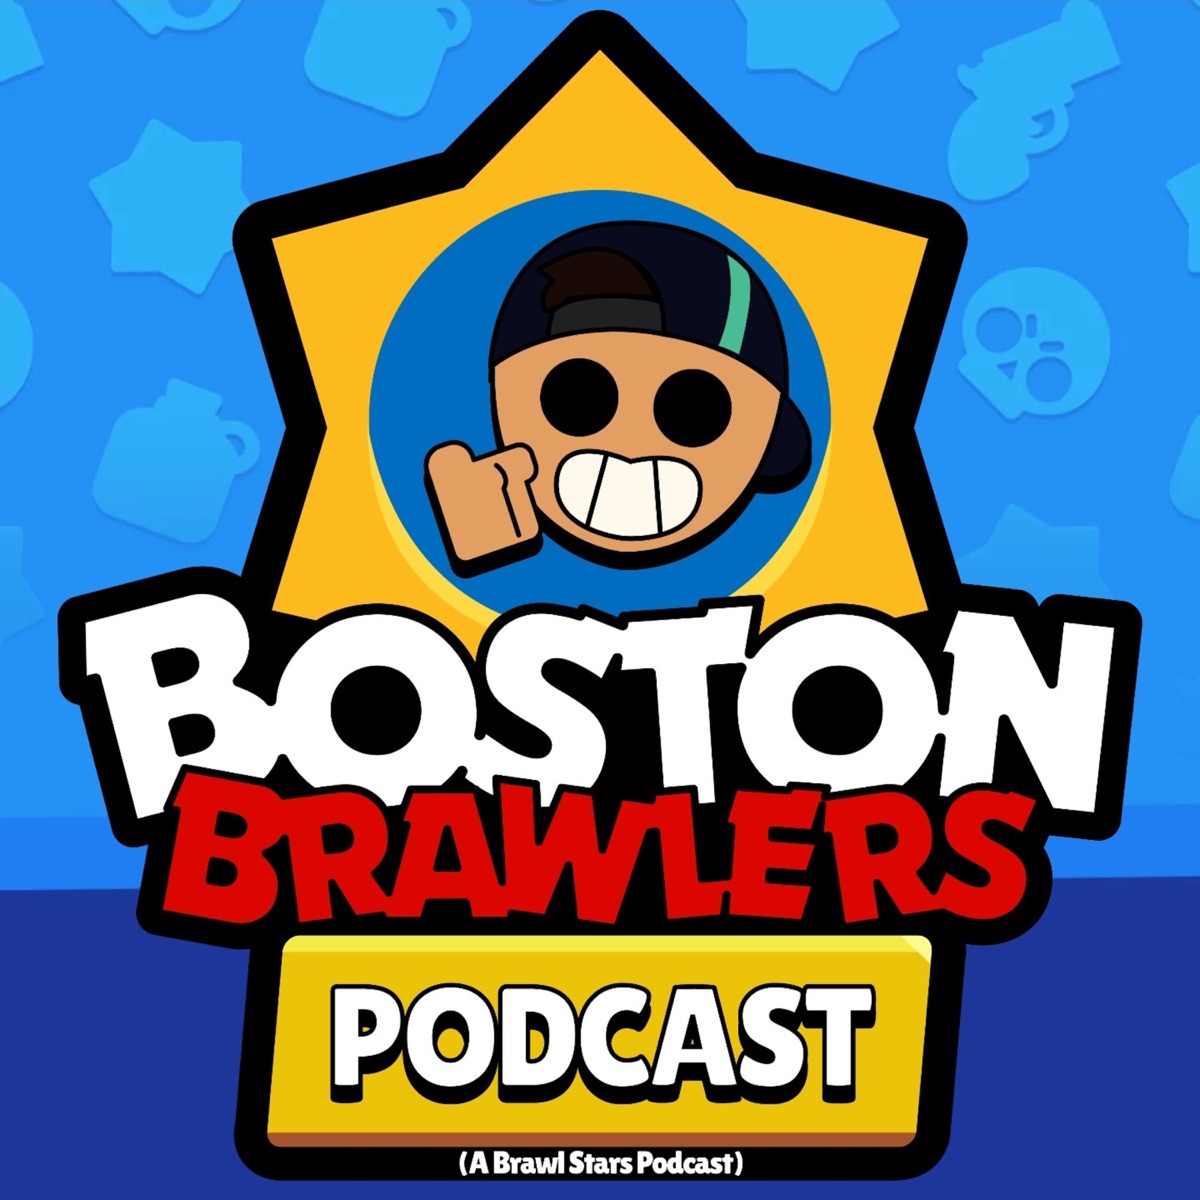 Boston Brawlers A Brawl Stars Podcast Podcast Podtail - brawl stars reddit giveaway